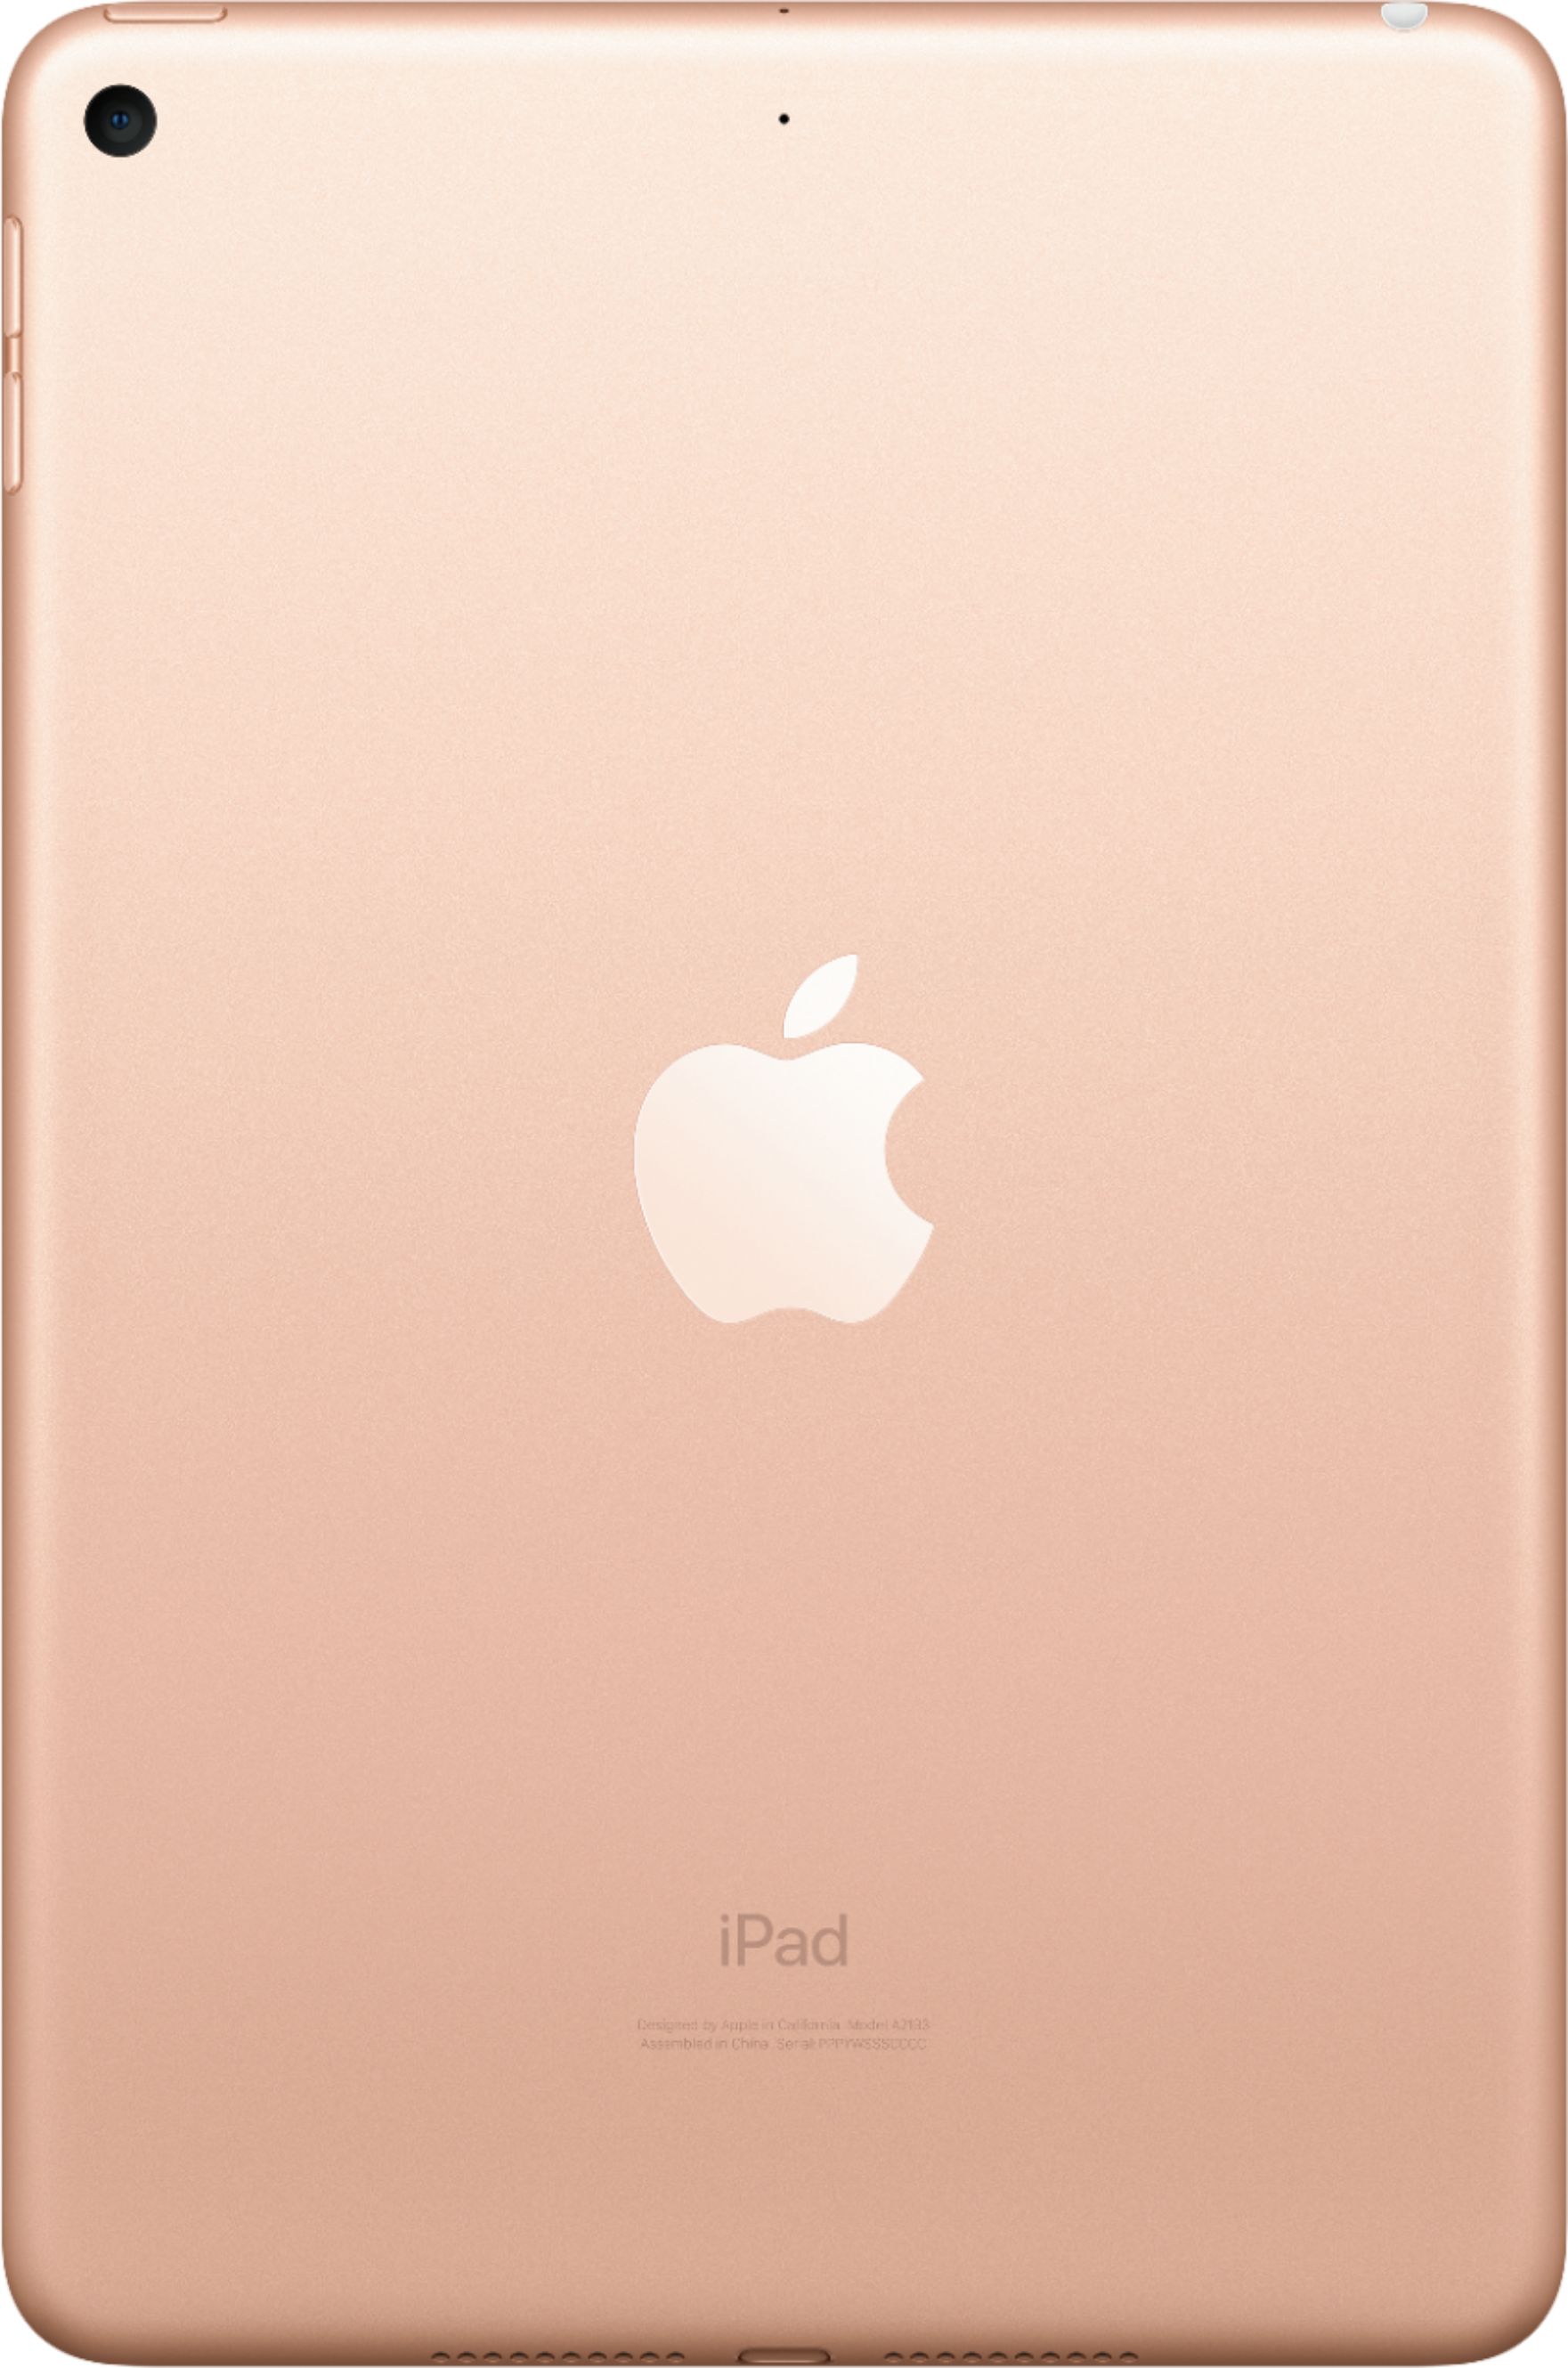 Back View: Apple - iPad mini (Latest Model) with Wi-Fi + Cellular - 256GB - Purple (AT&T)